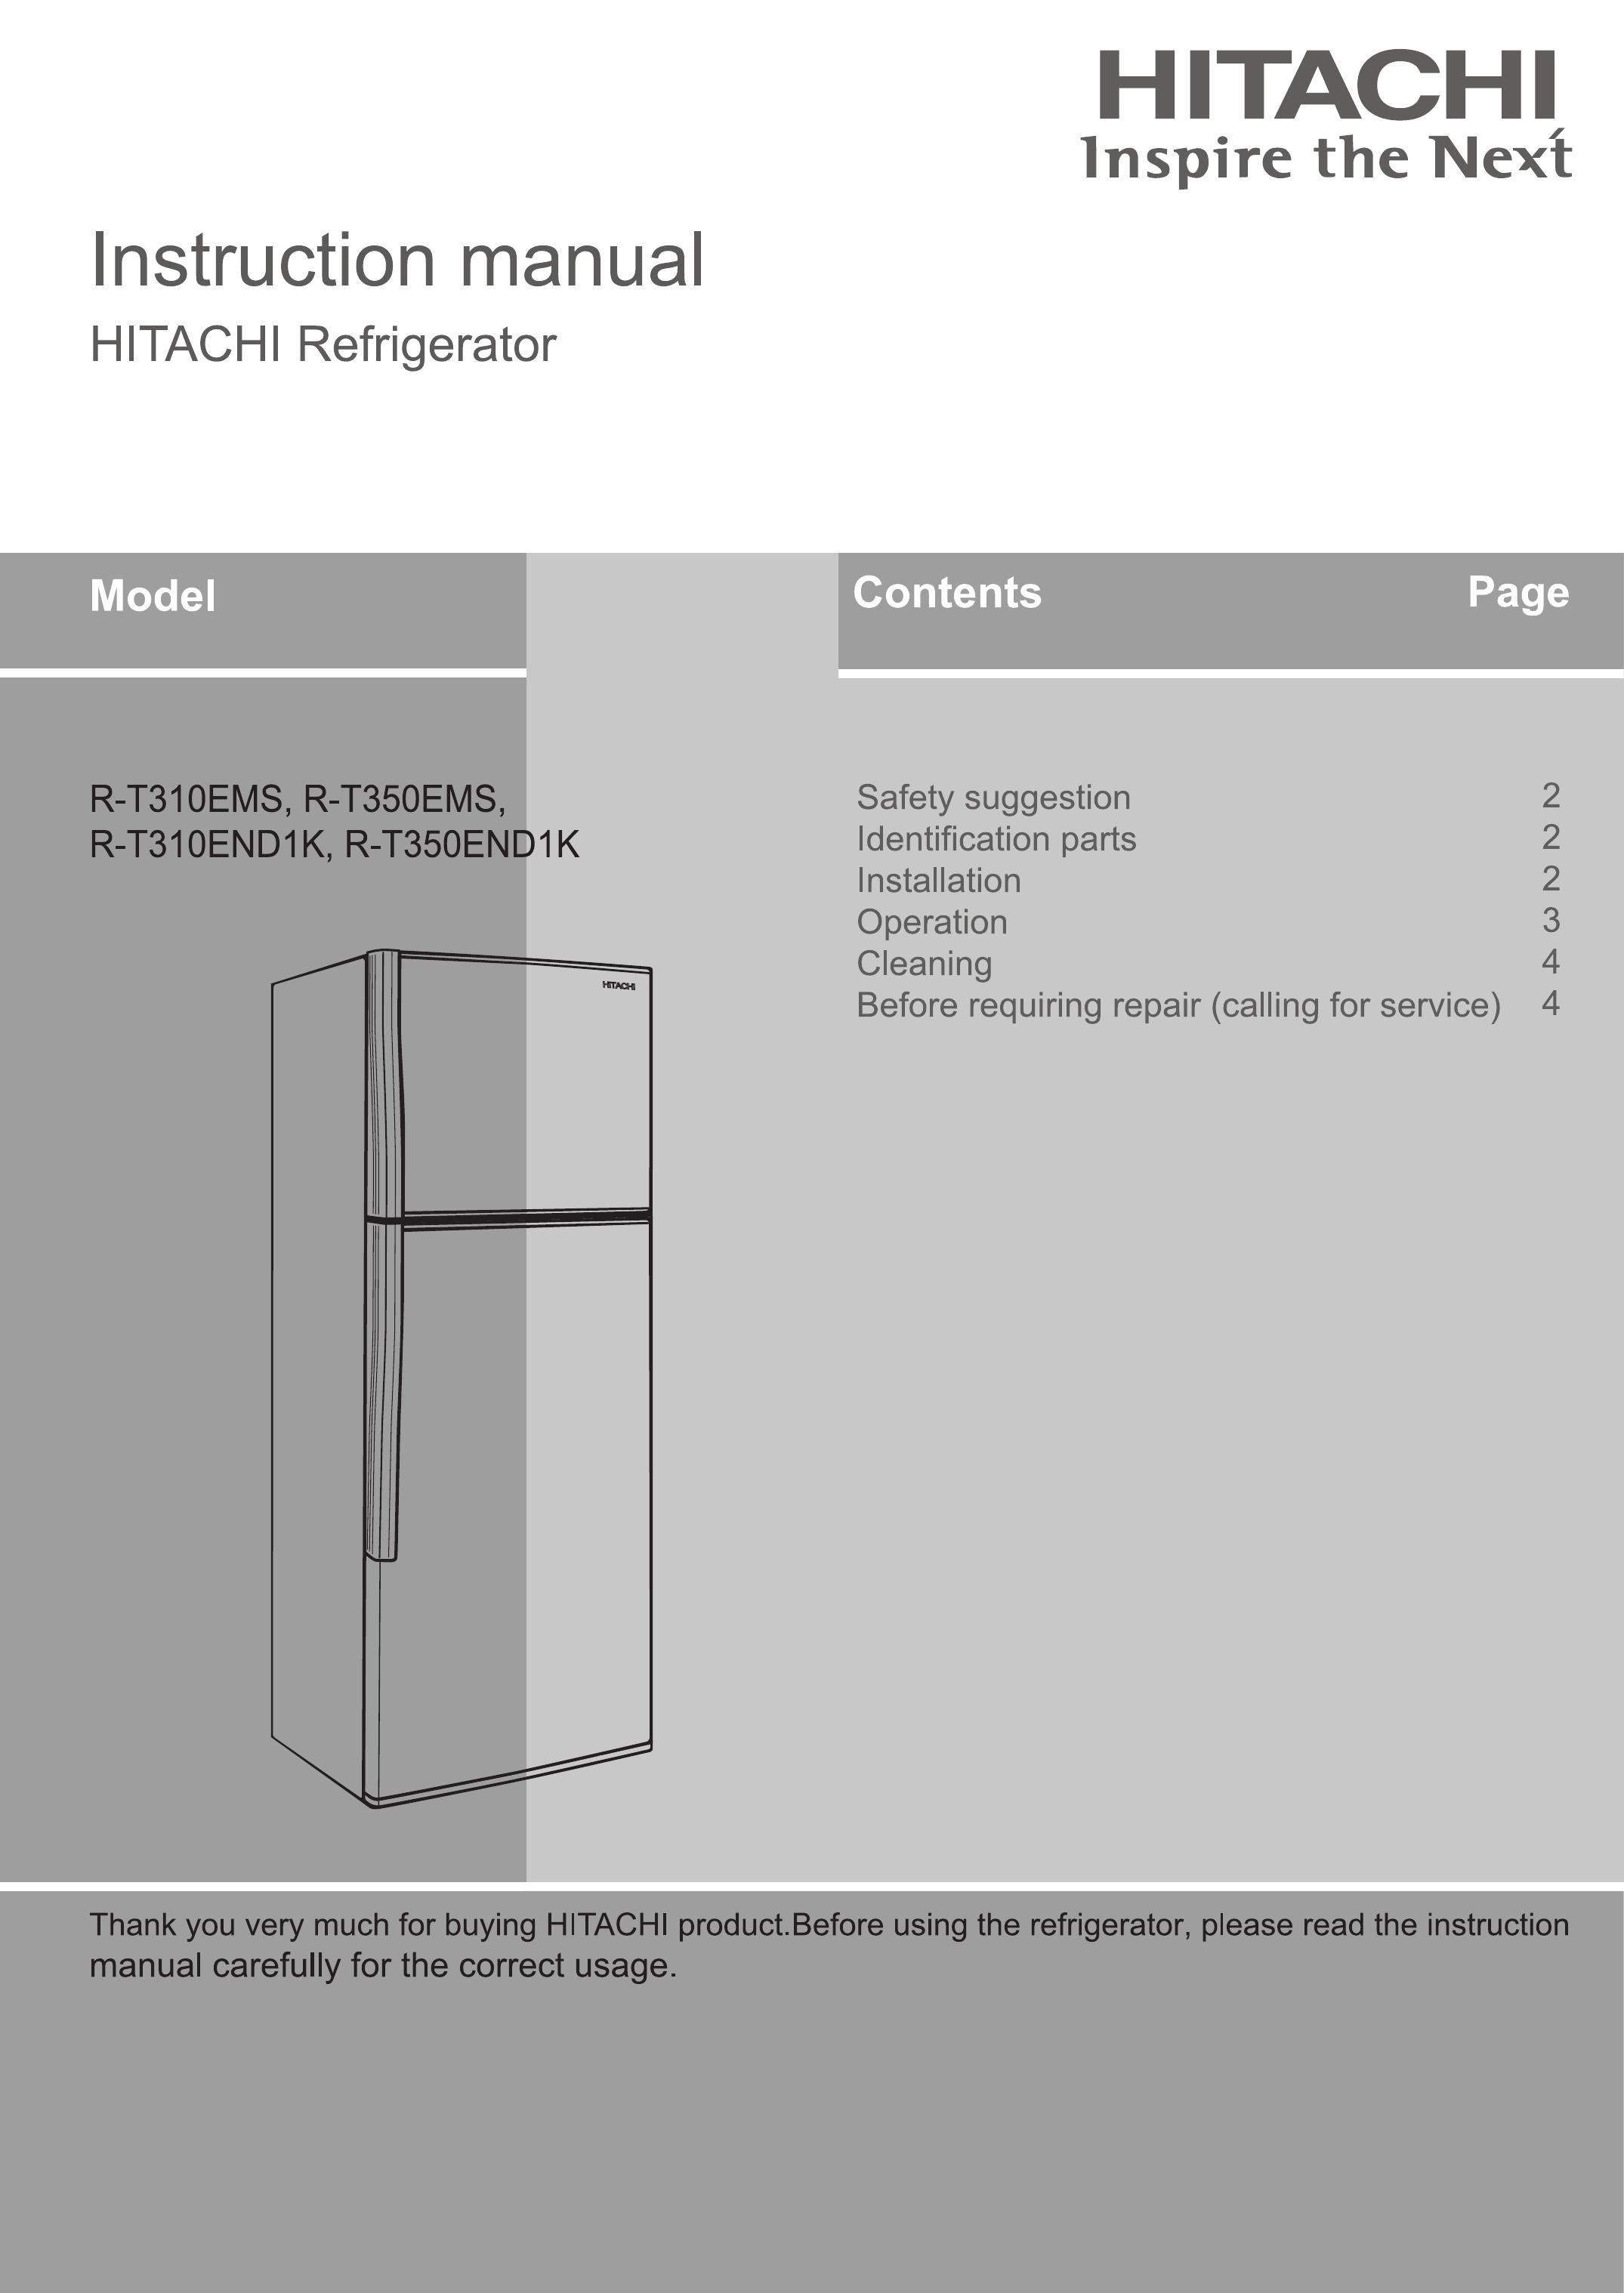 Hitachi R-T350END1K Refrigerator User Manual